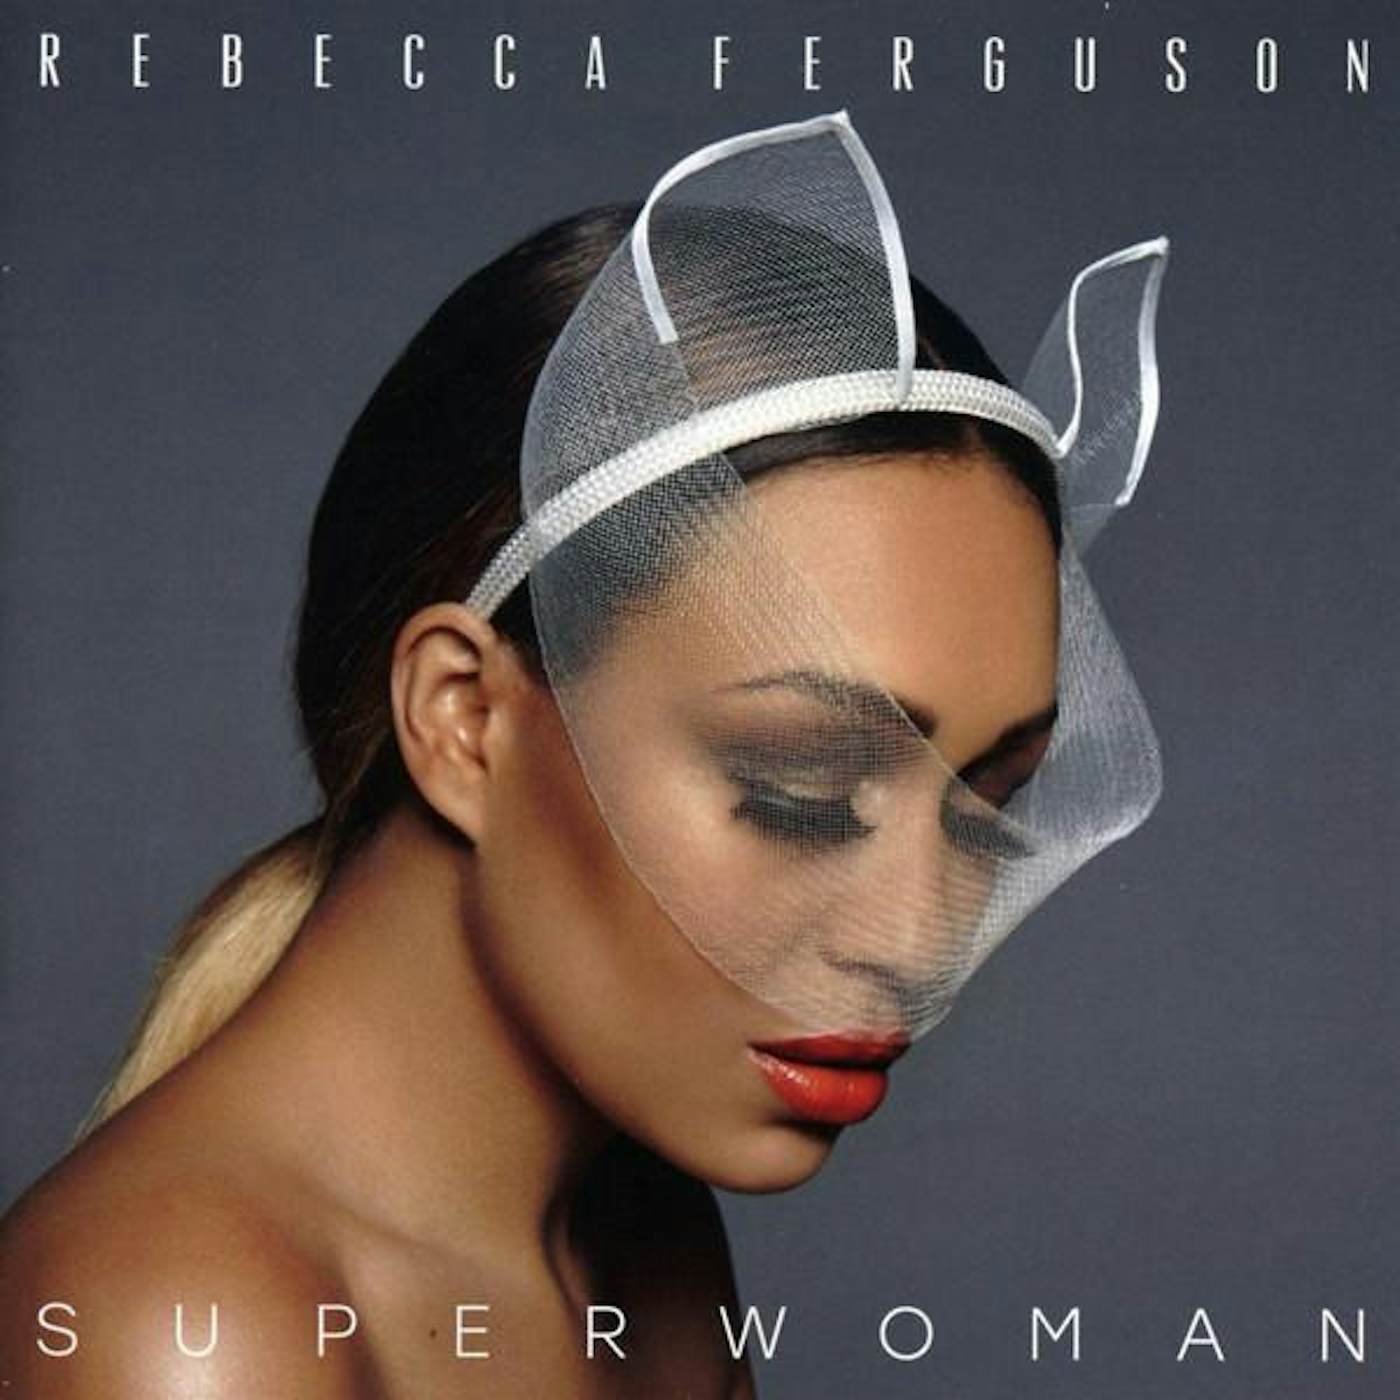 Rebecca Ferguson SUPERWOMAN CD